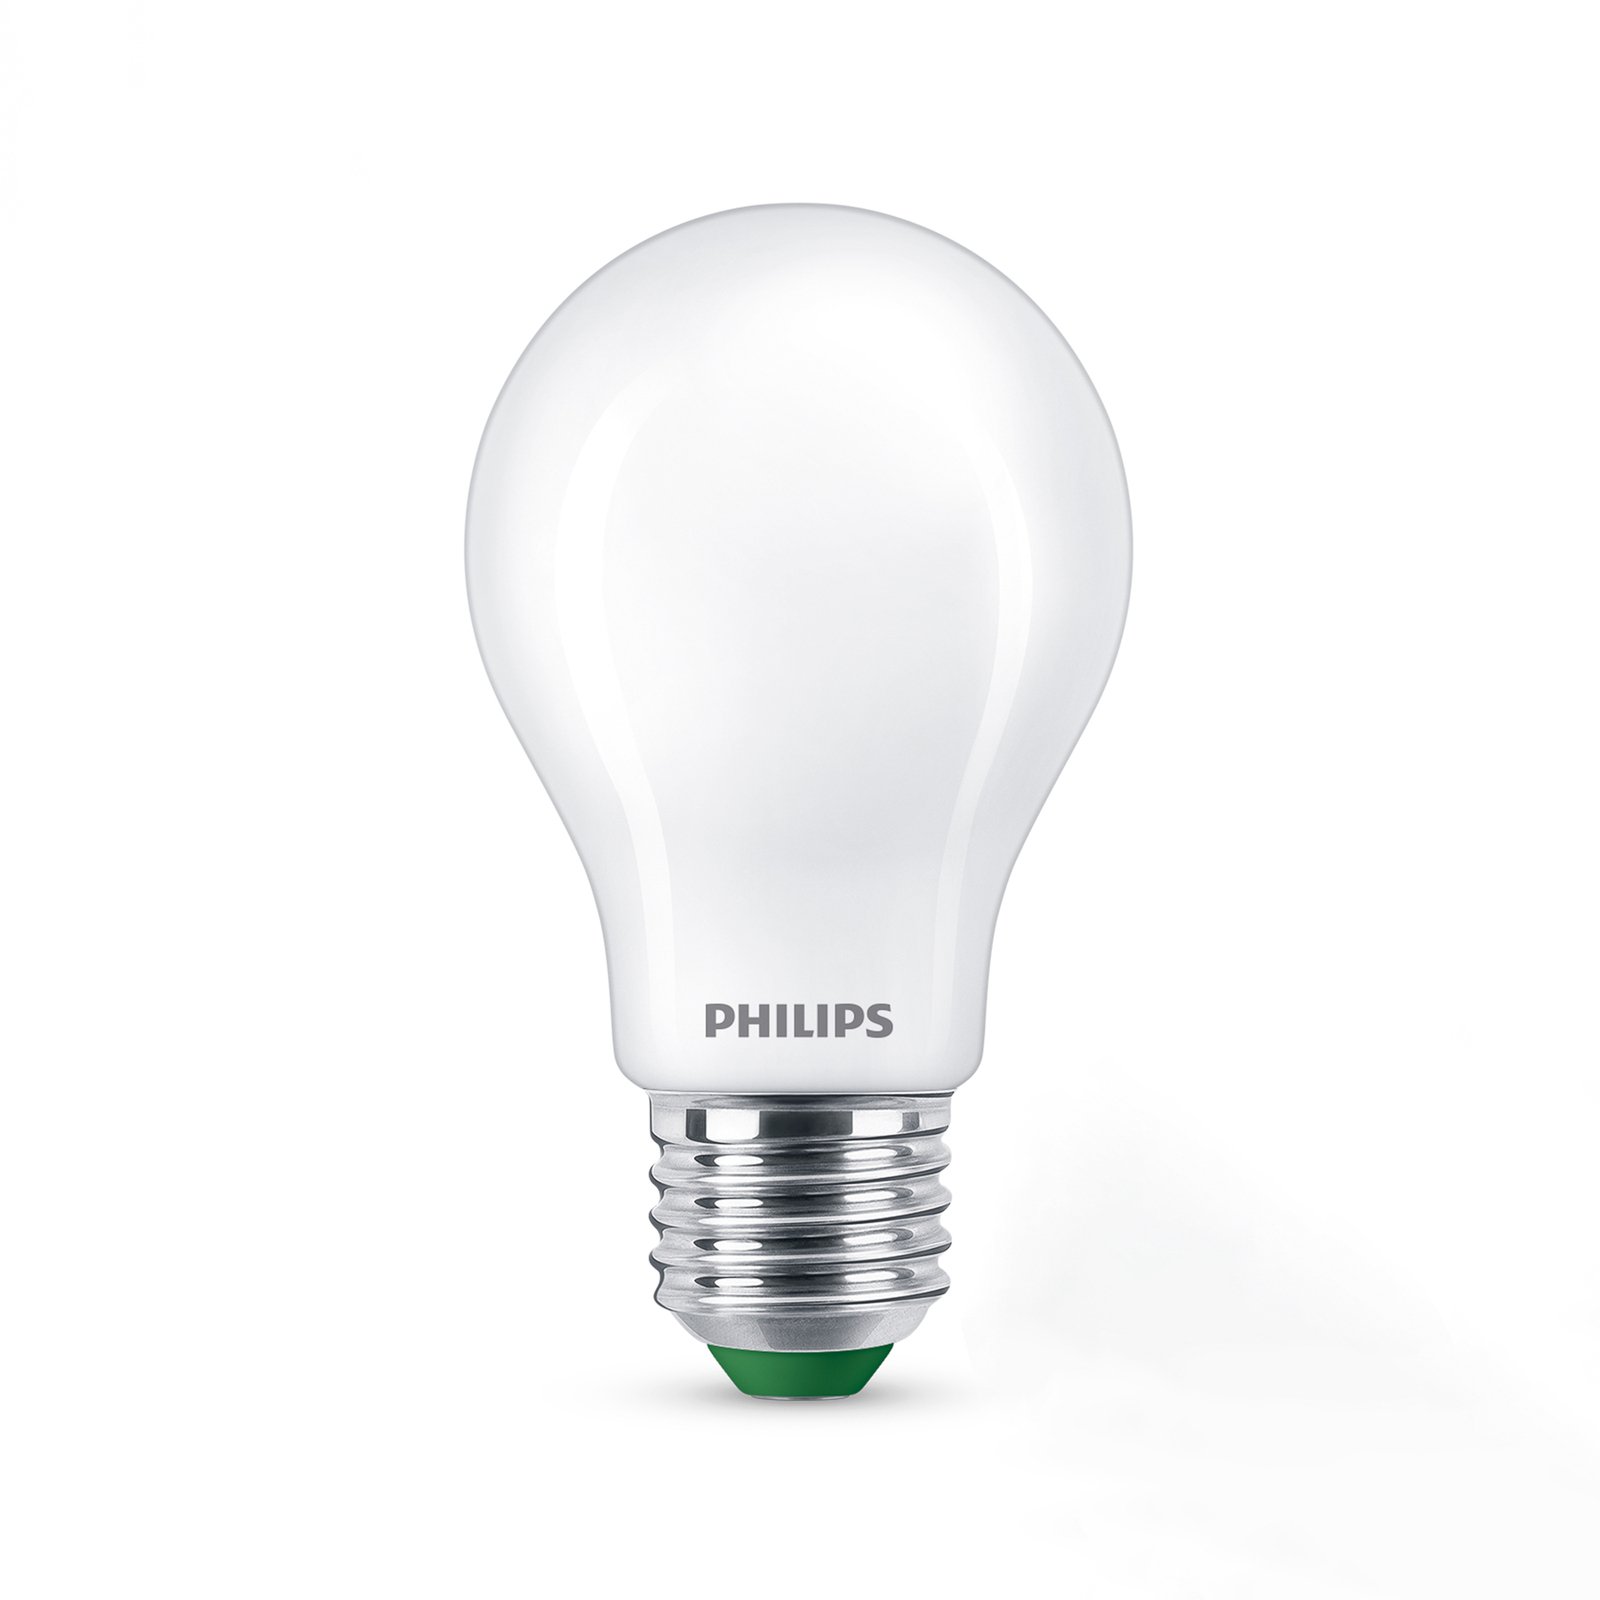 Philips bombilla LED E27 A60 4W 840lm mate 3.000K